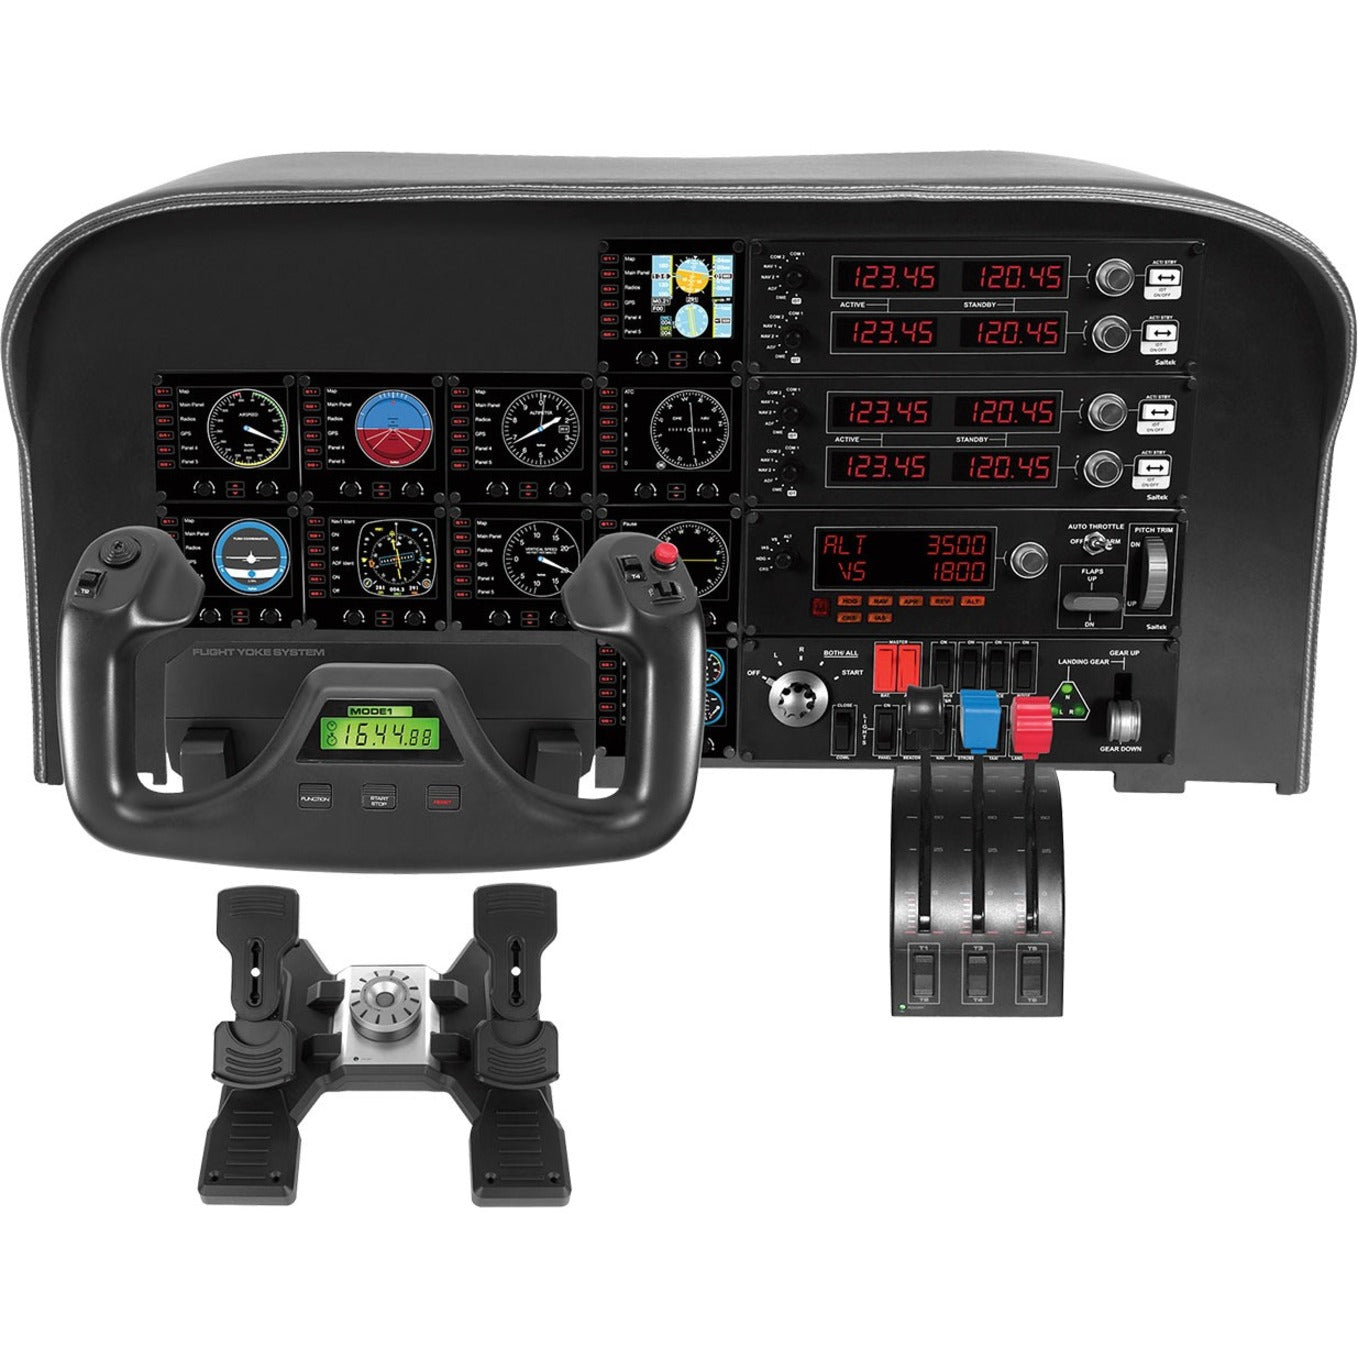 Logitech 945-000030 Saitek Pro Flight Switch Panel, Professional Simulation Switch Controller